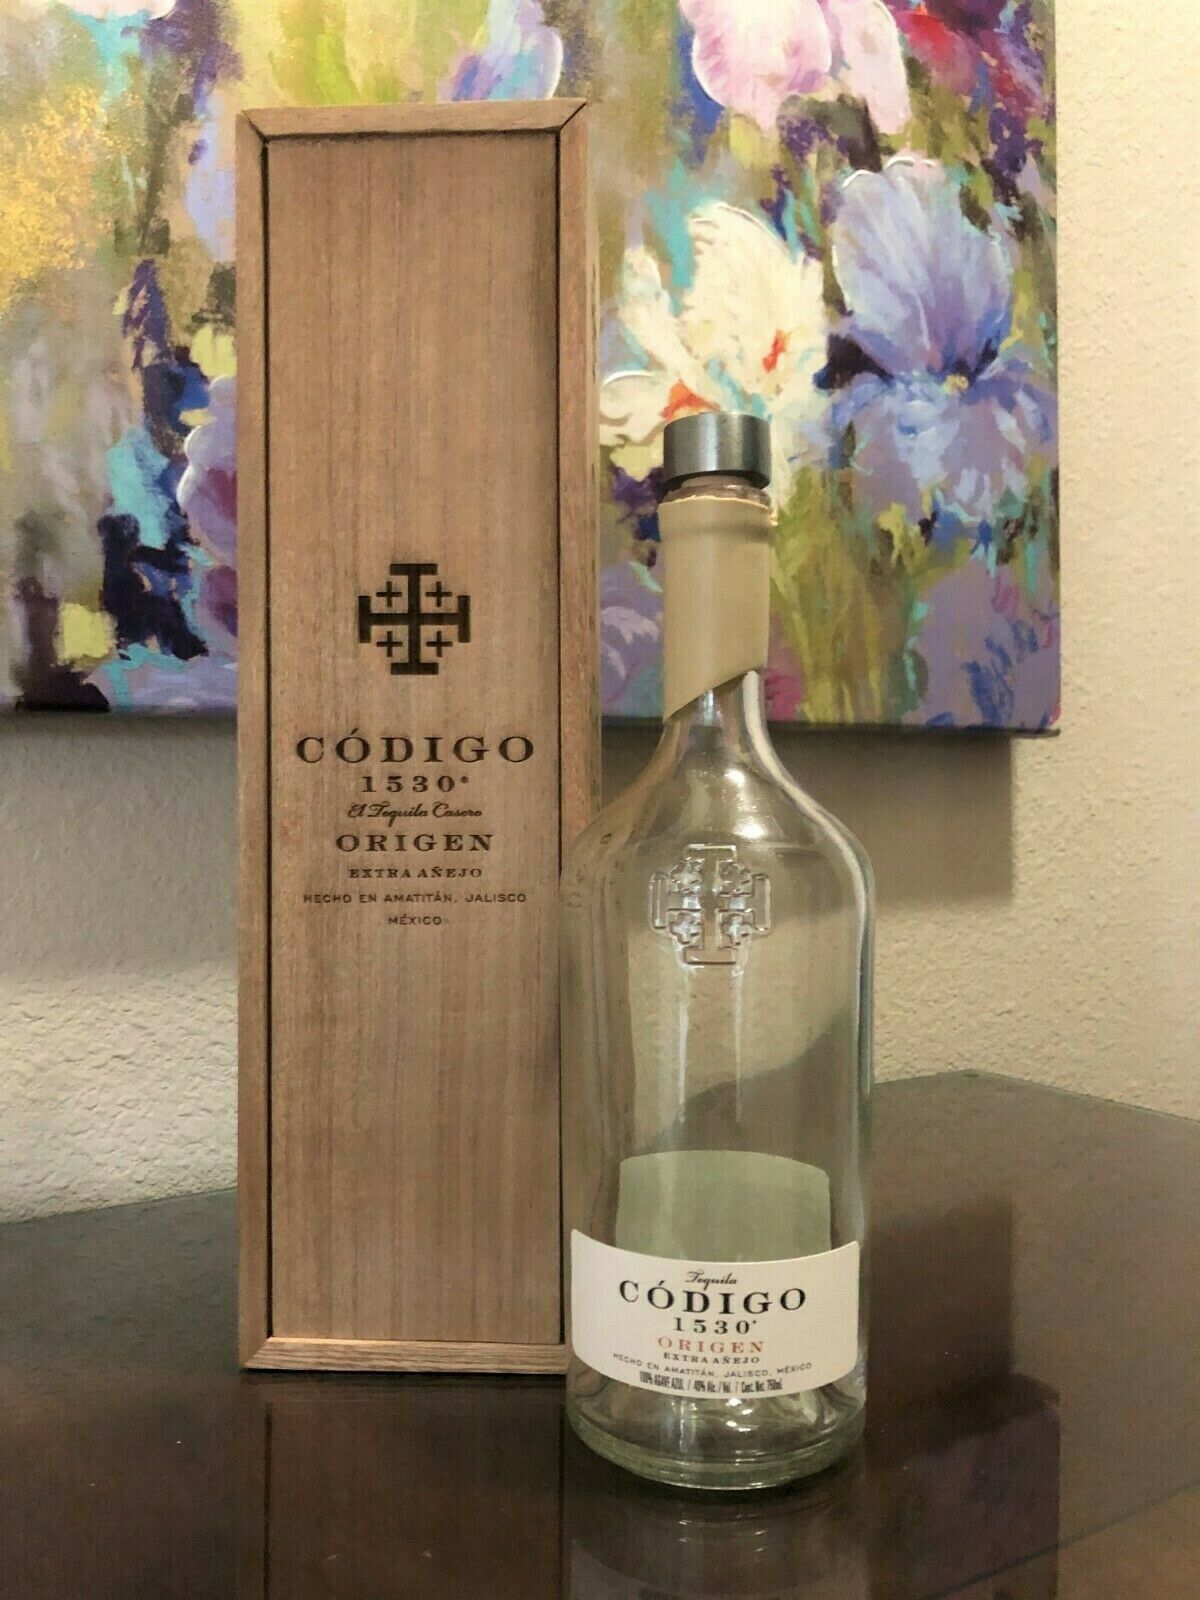 Codigo 1530 Origen Extra Anejo Tequila Bottle and Wooden Display Box,Empty 750ml